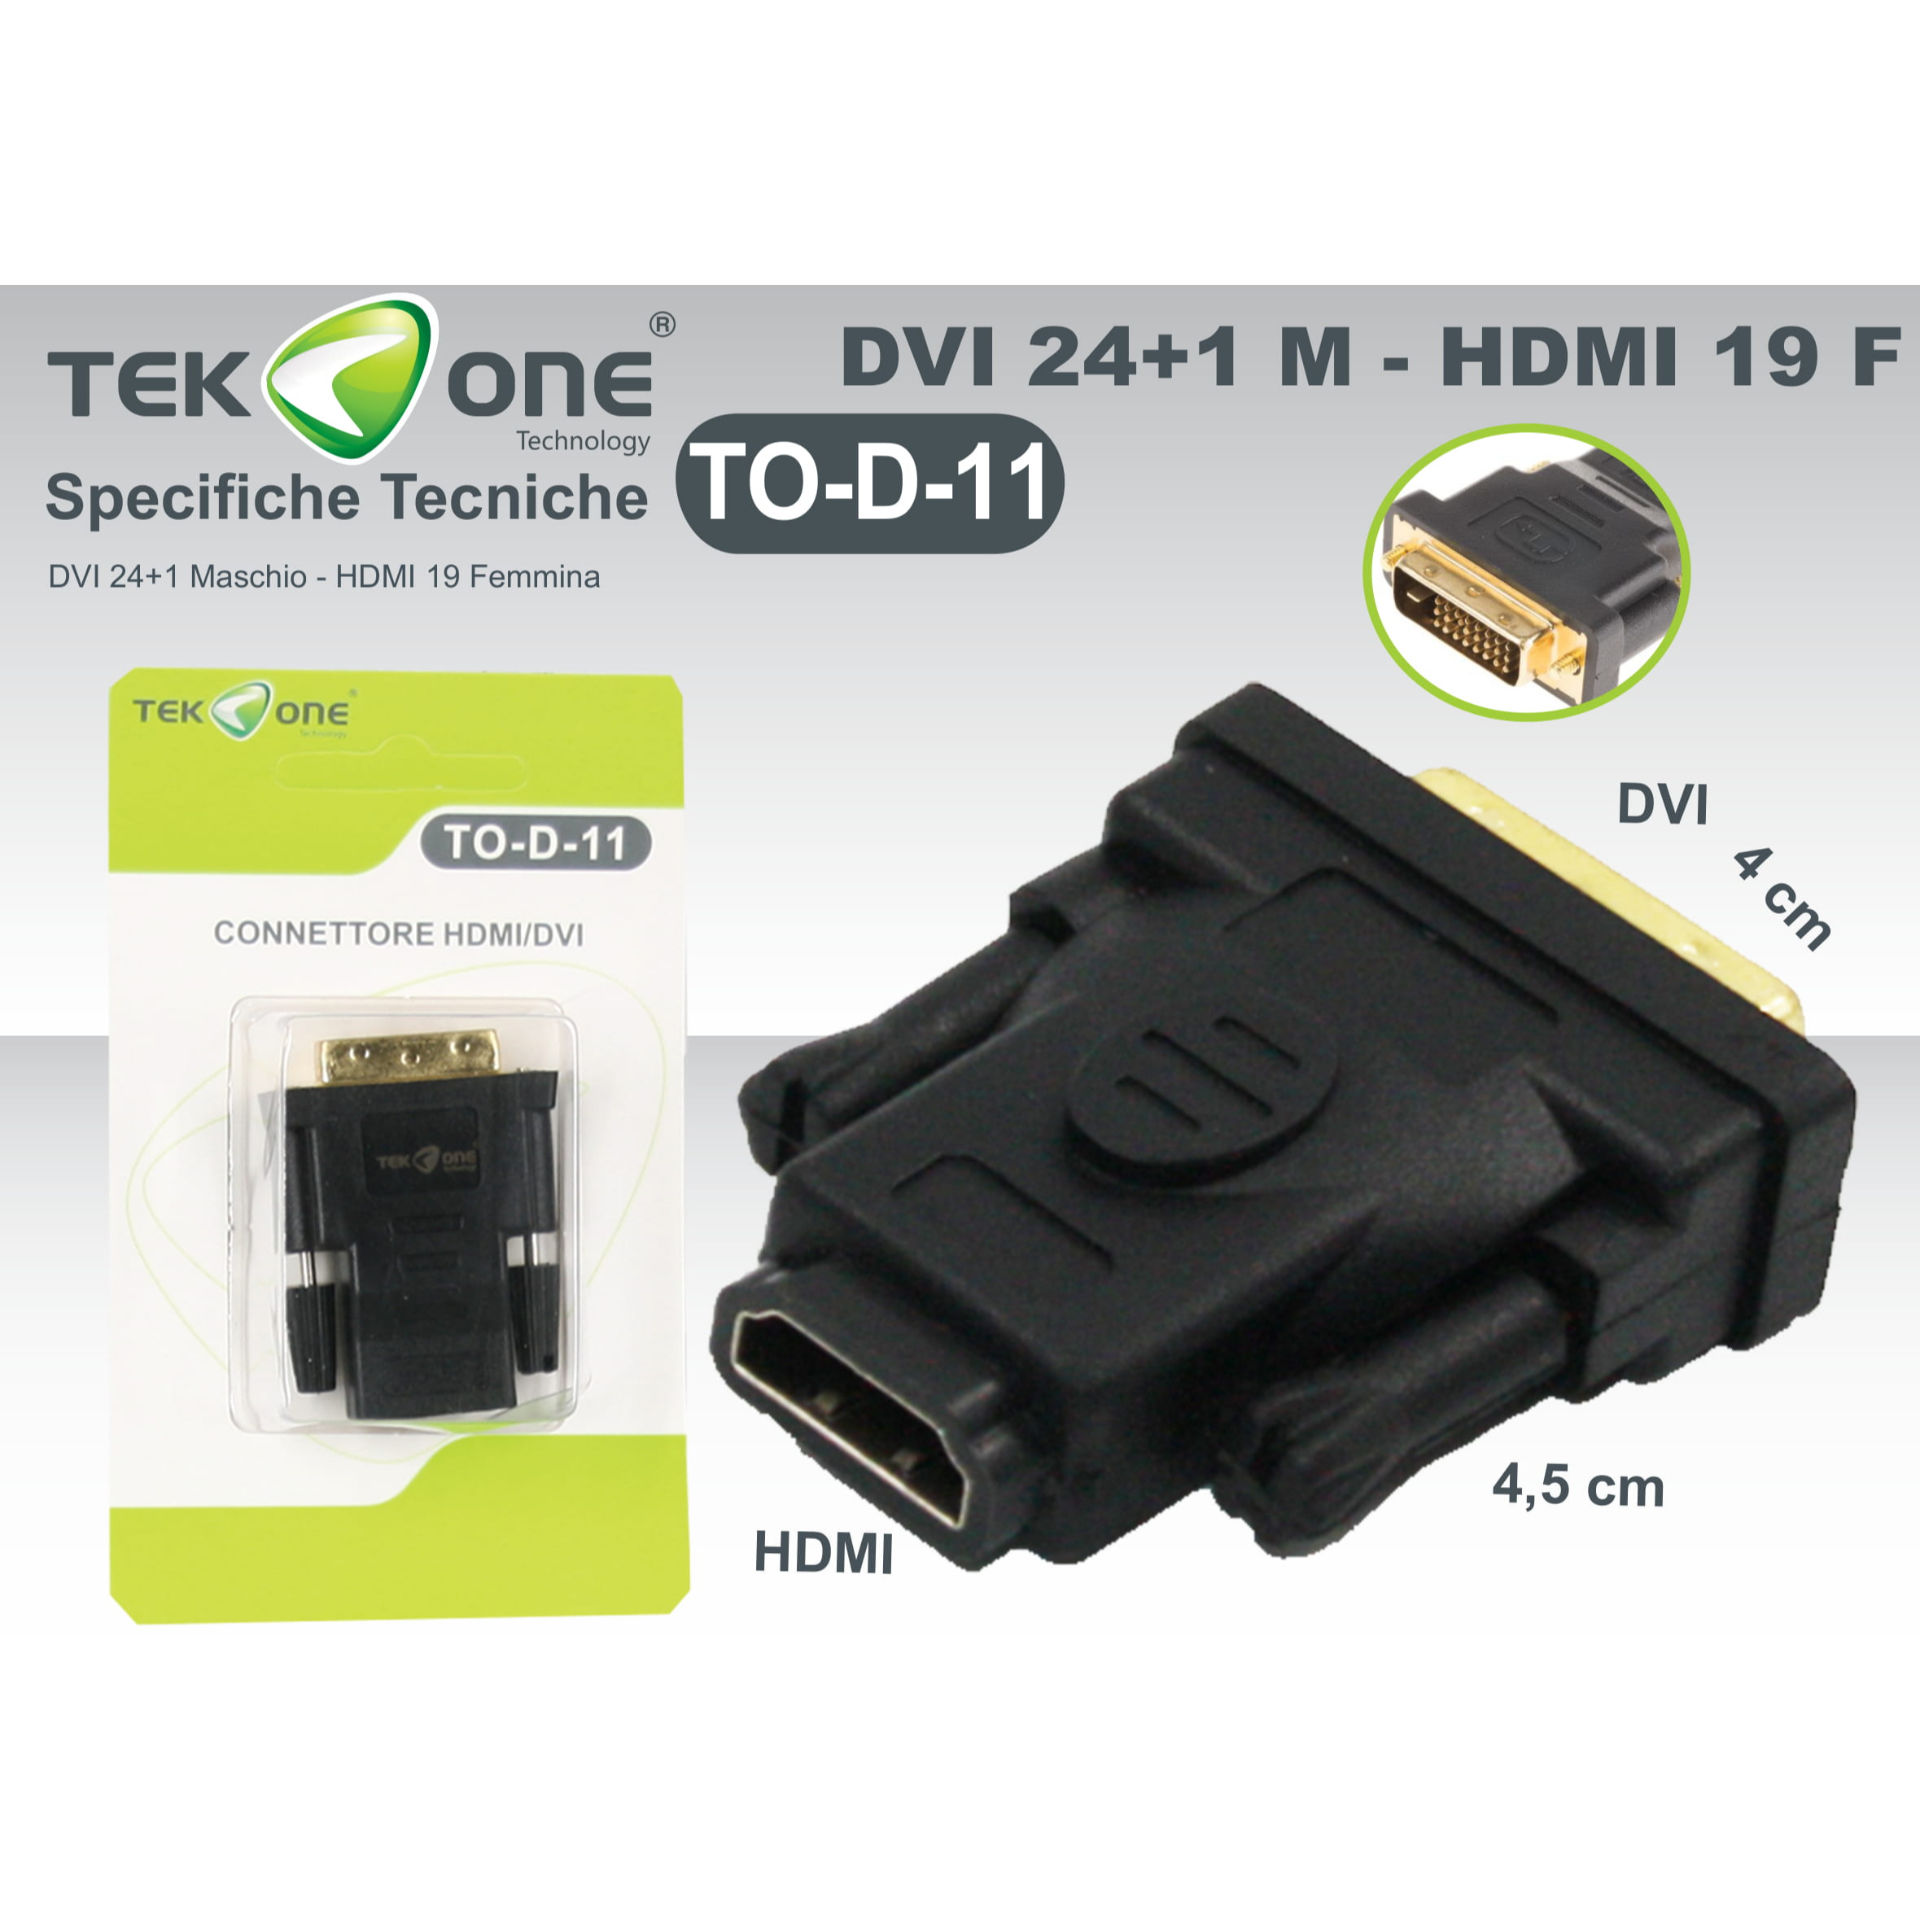 CONNETTORE HDMI/DVITekone